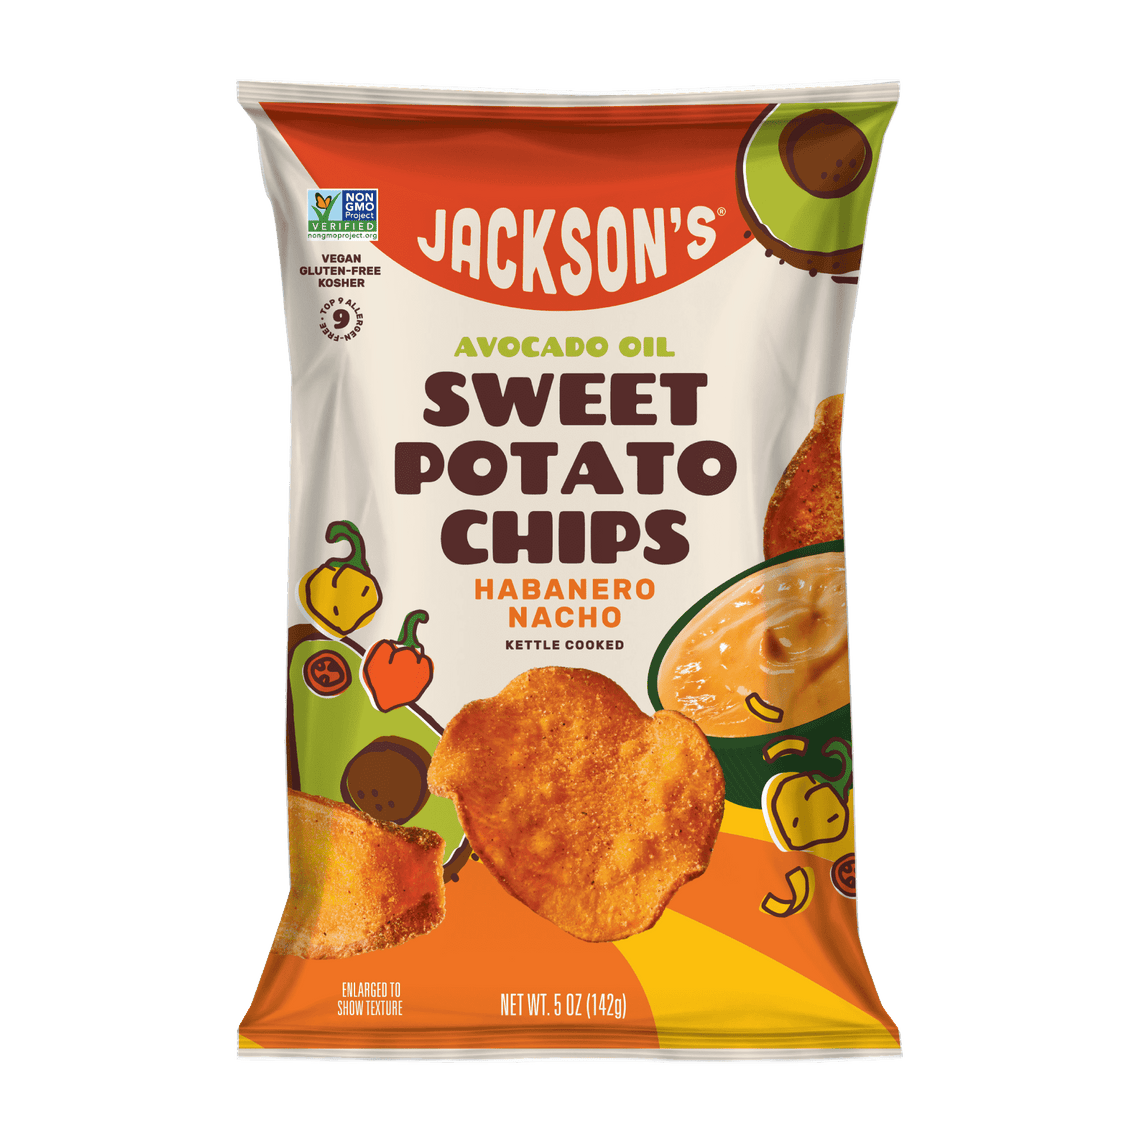 Habanero Nacho Sweet Potato Chips in Avocado Oil 5oz Bags